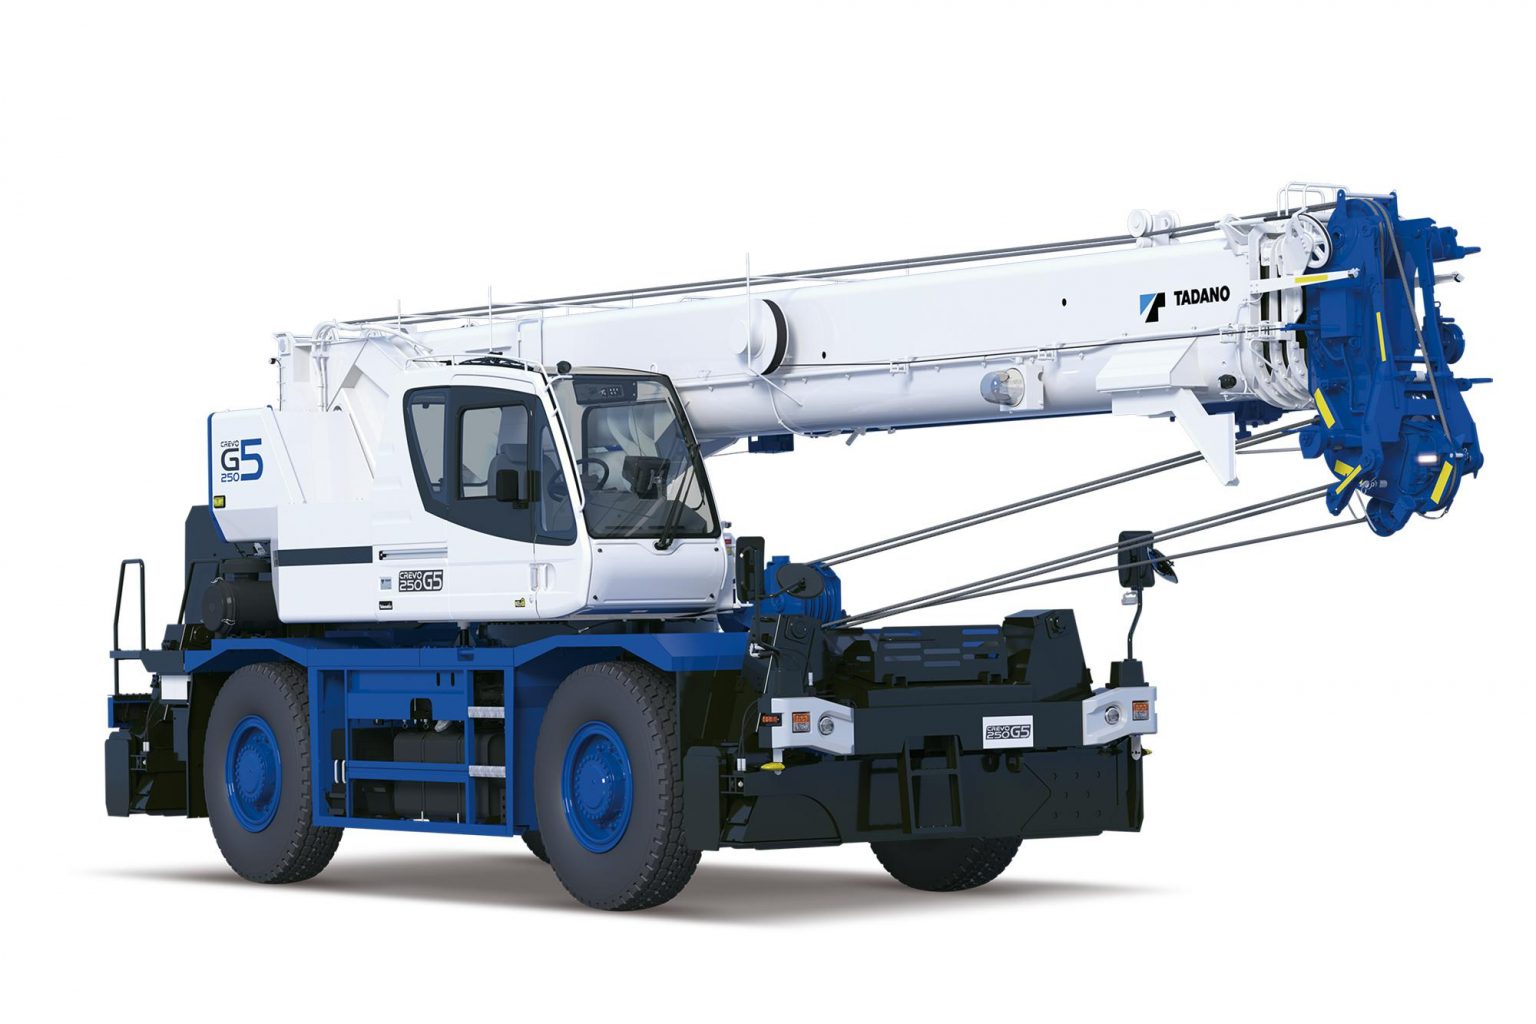 Introducing New 25 Metric Tons Capacity Rough Terrain Crane "GR-250N" For Japanese Domestic Market